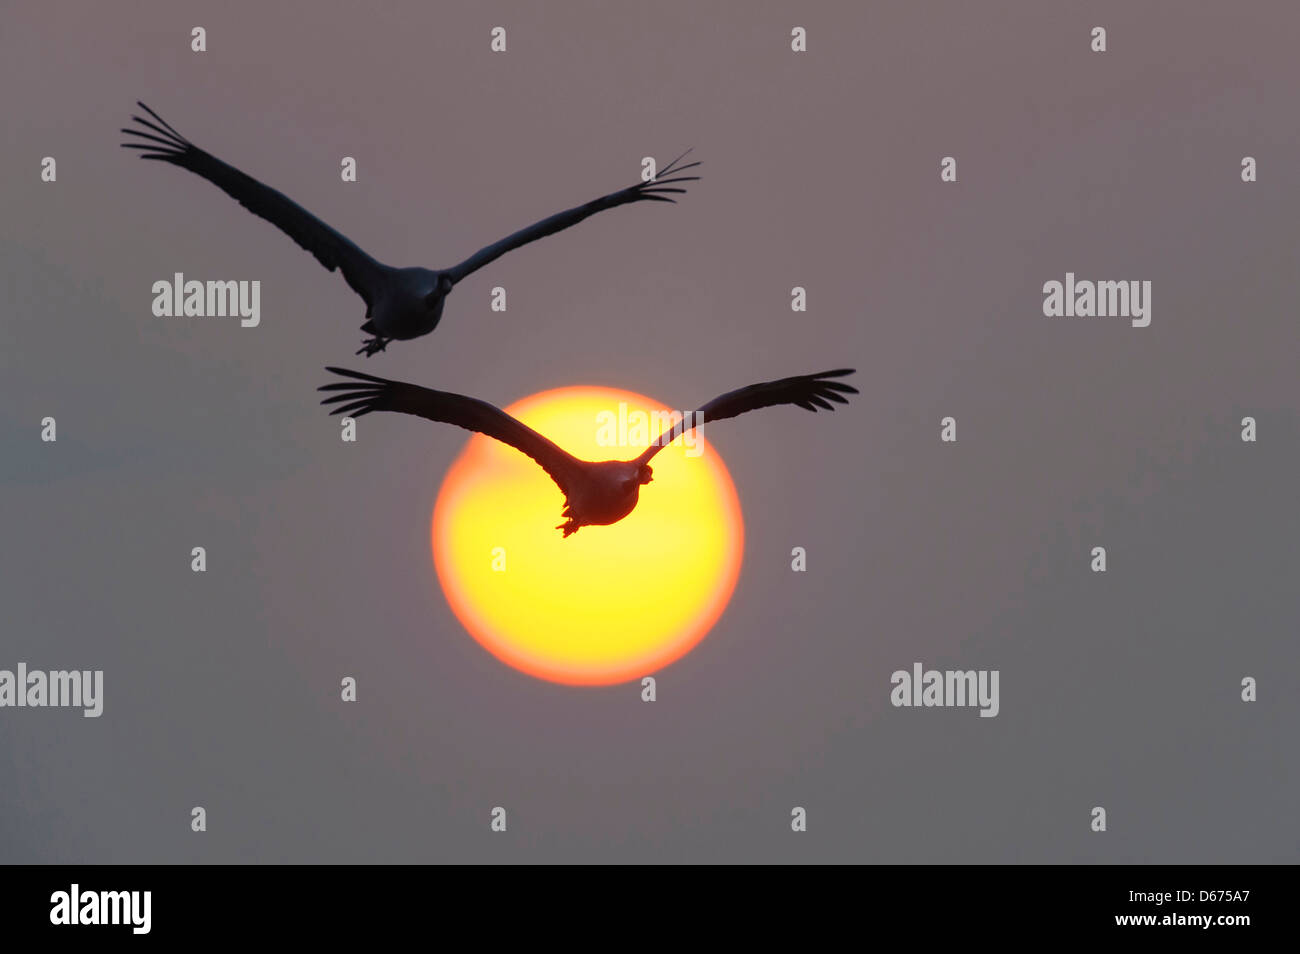 cranes in flight, grus grus, germany Stock Photo